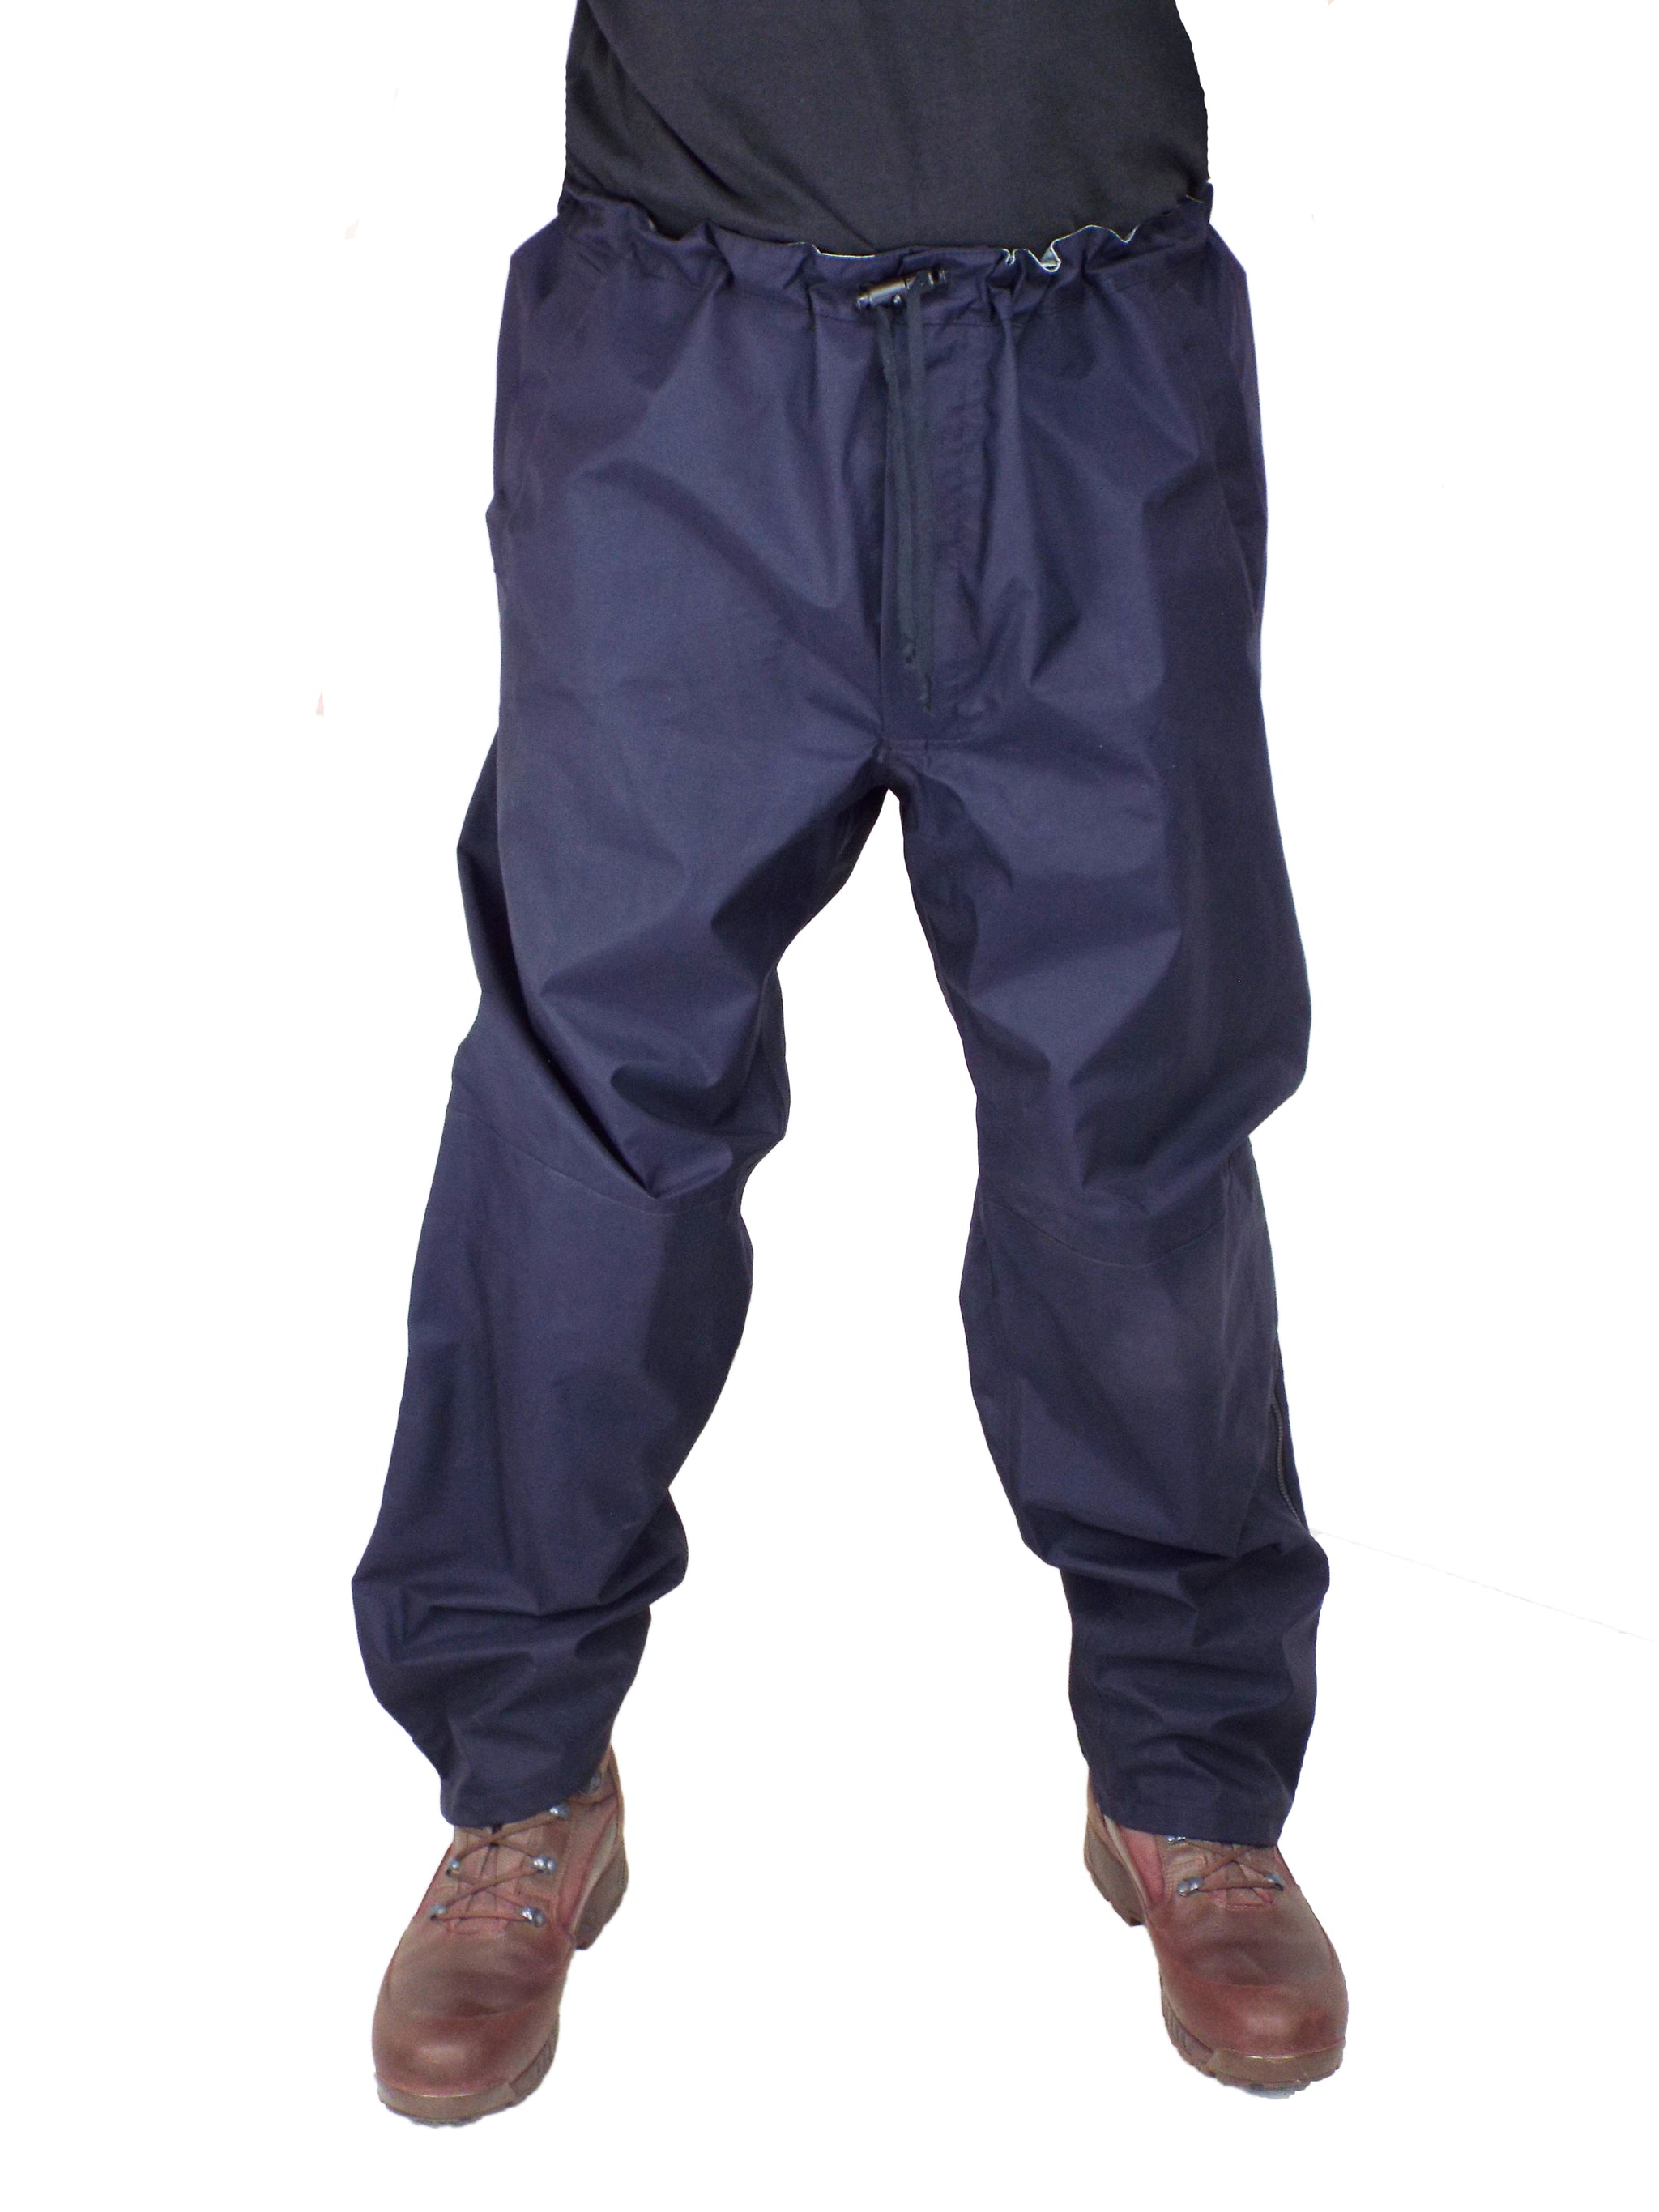 Backcountry Cardiac GORE-TEX PRO Bib Pant - Men's - Clothing